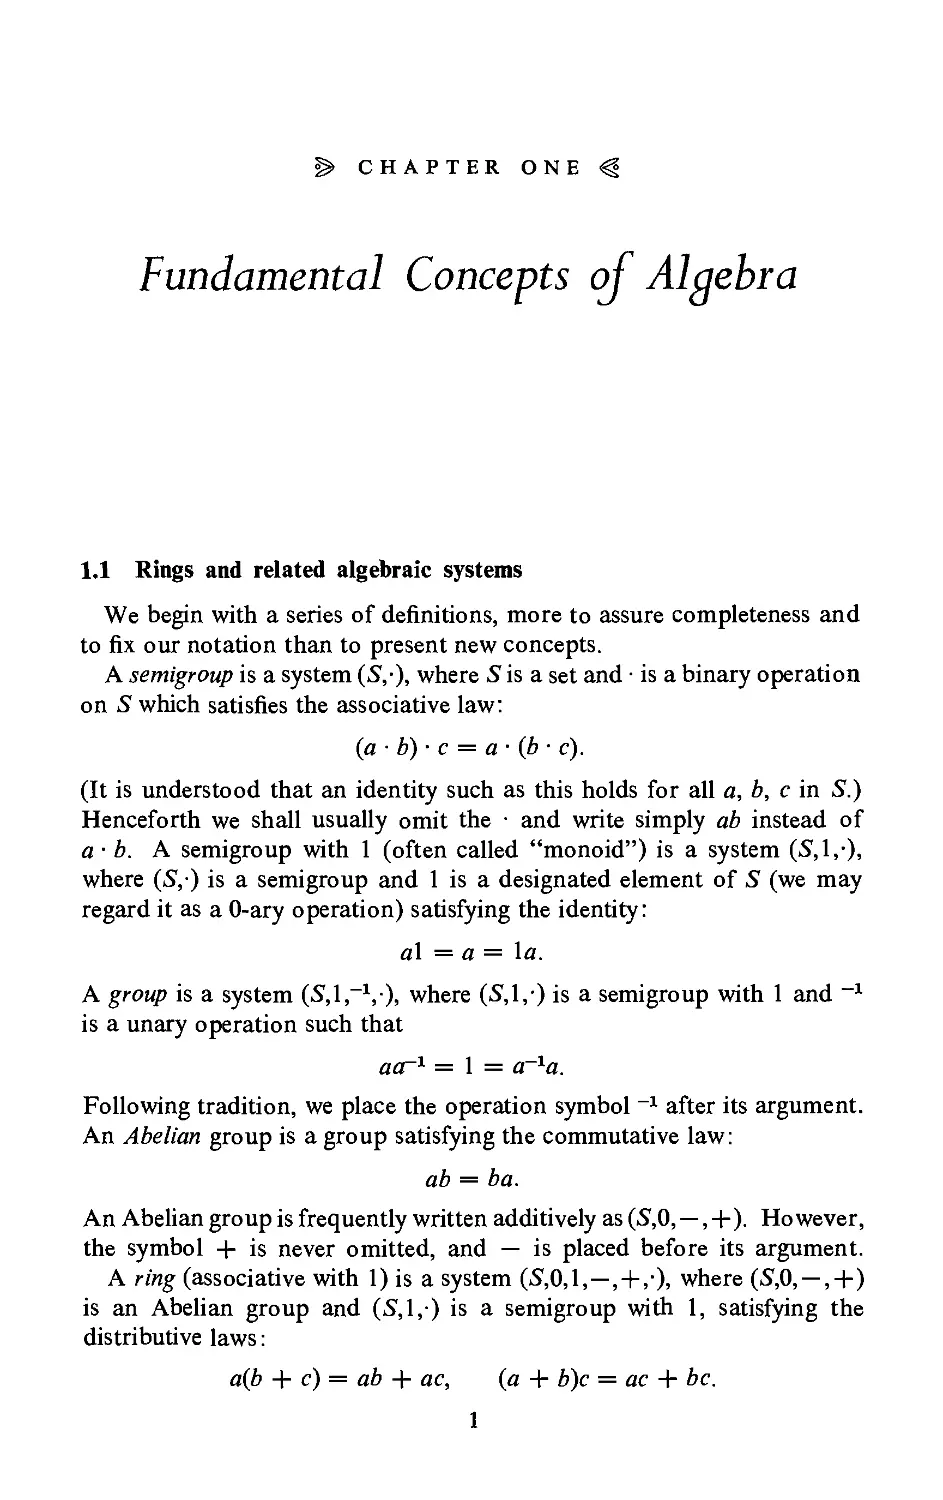 1. Fundamental Concepts of Algebra